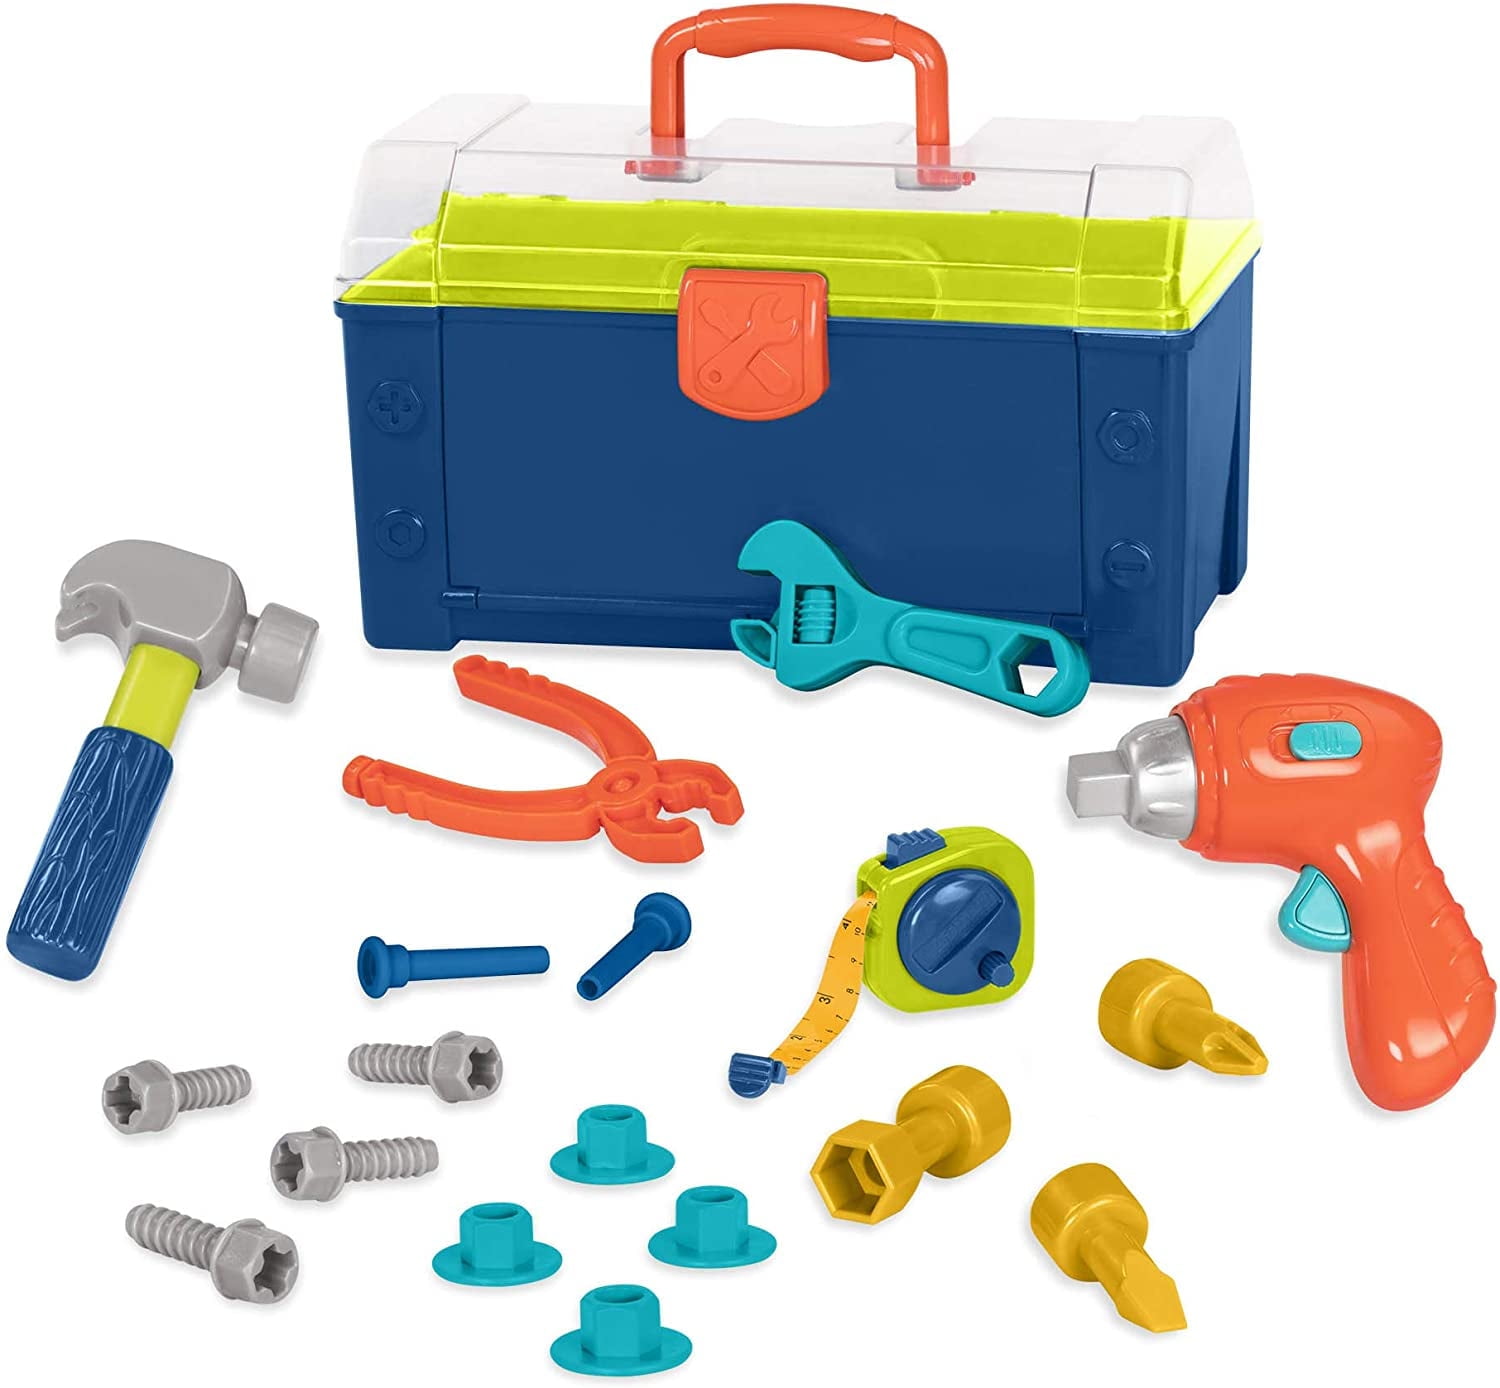 REXBETI 25-Piece Kids Tool Set with Real Hand Tools, Blue Storage Bag